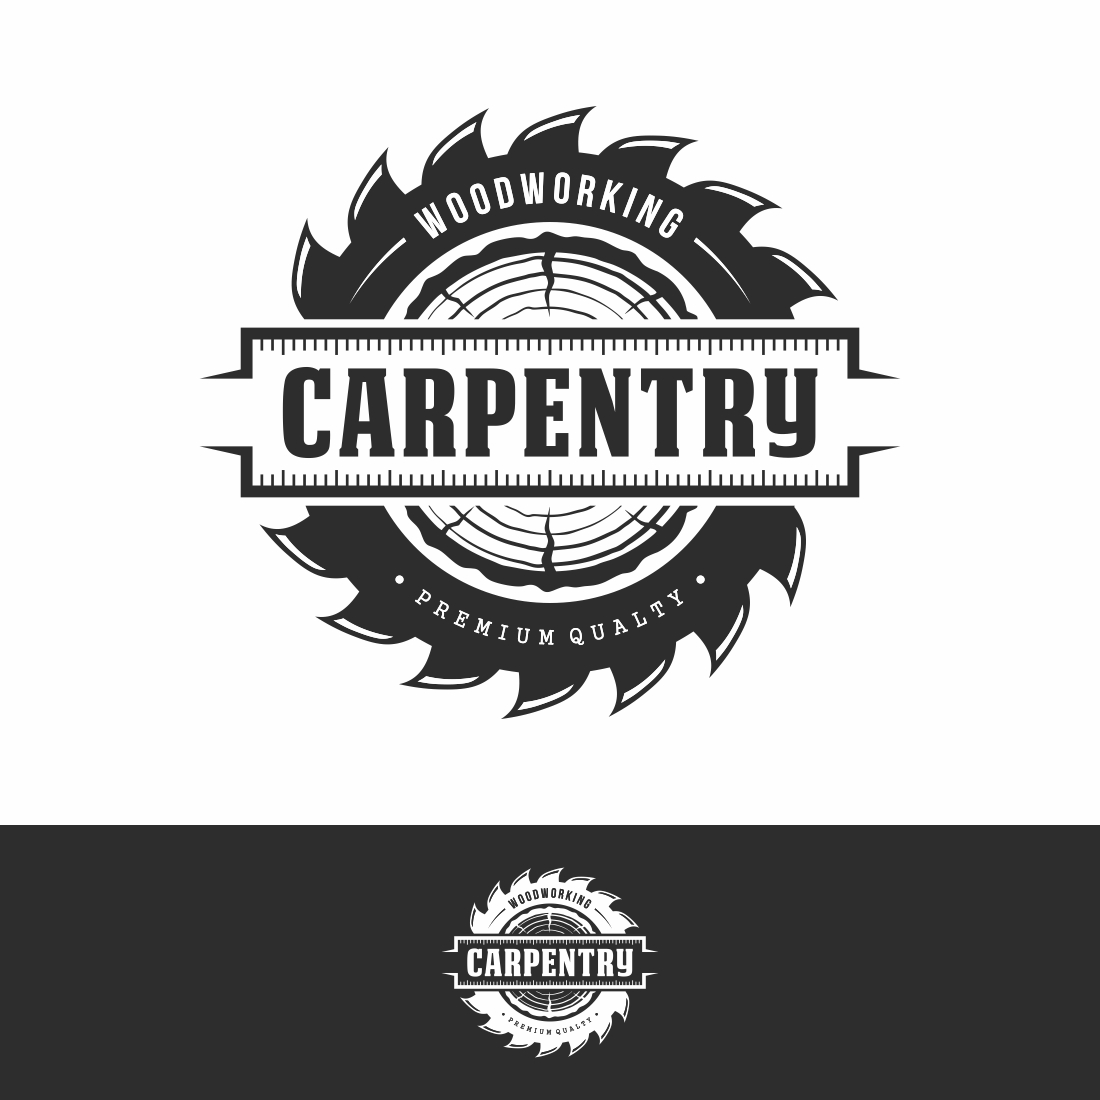 carpentry retro vintage logo design – Only $6 cover image.